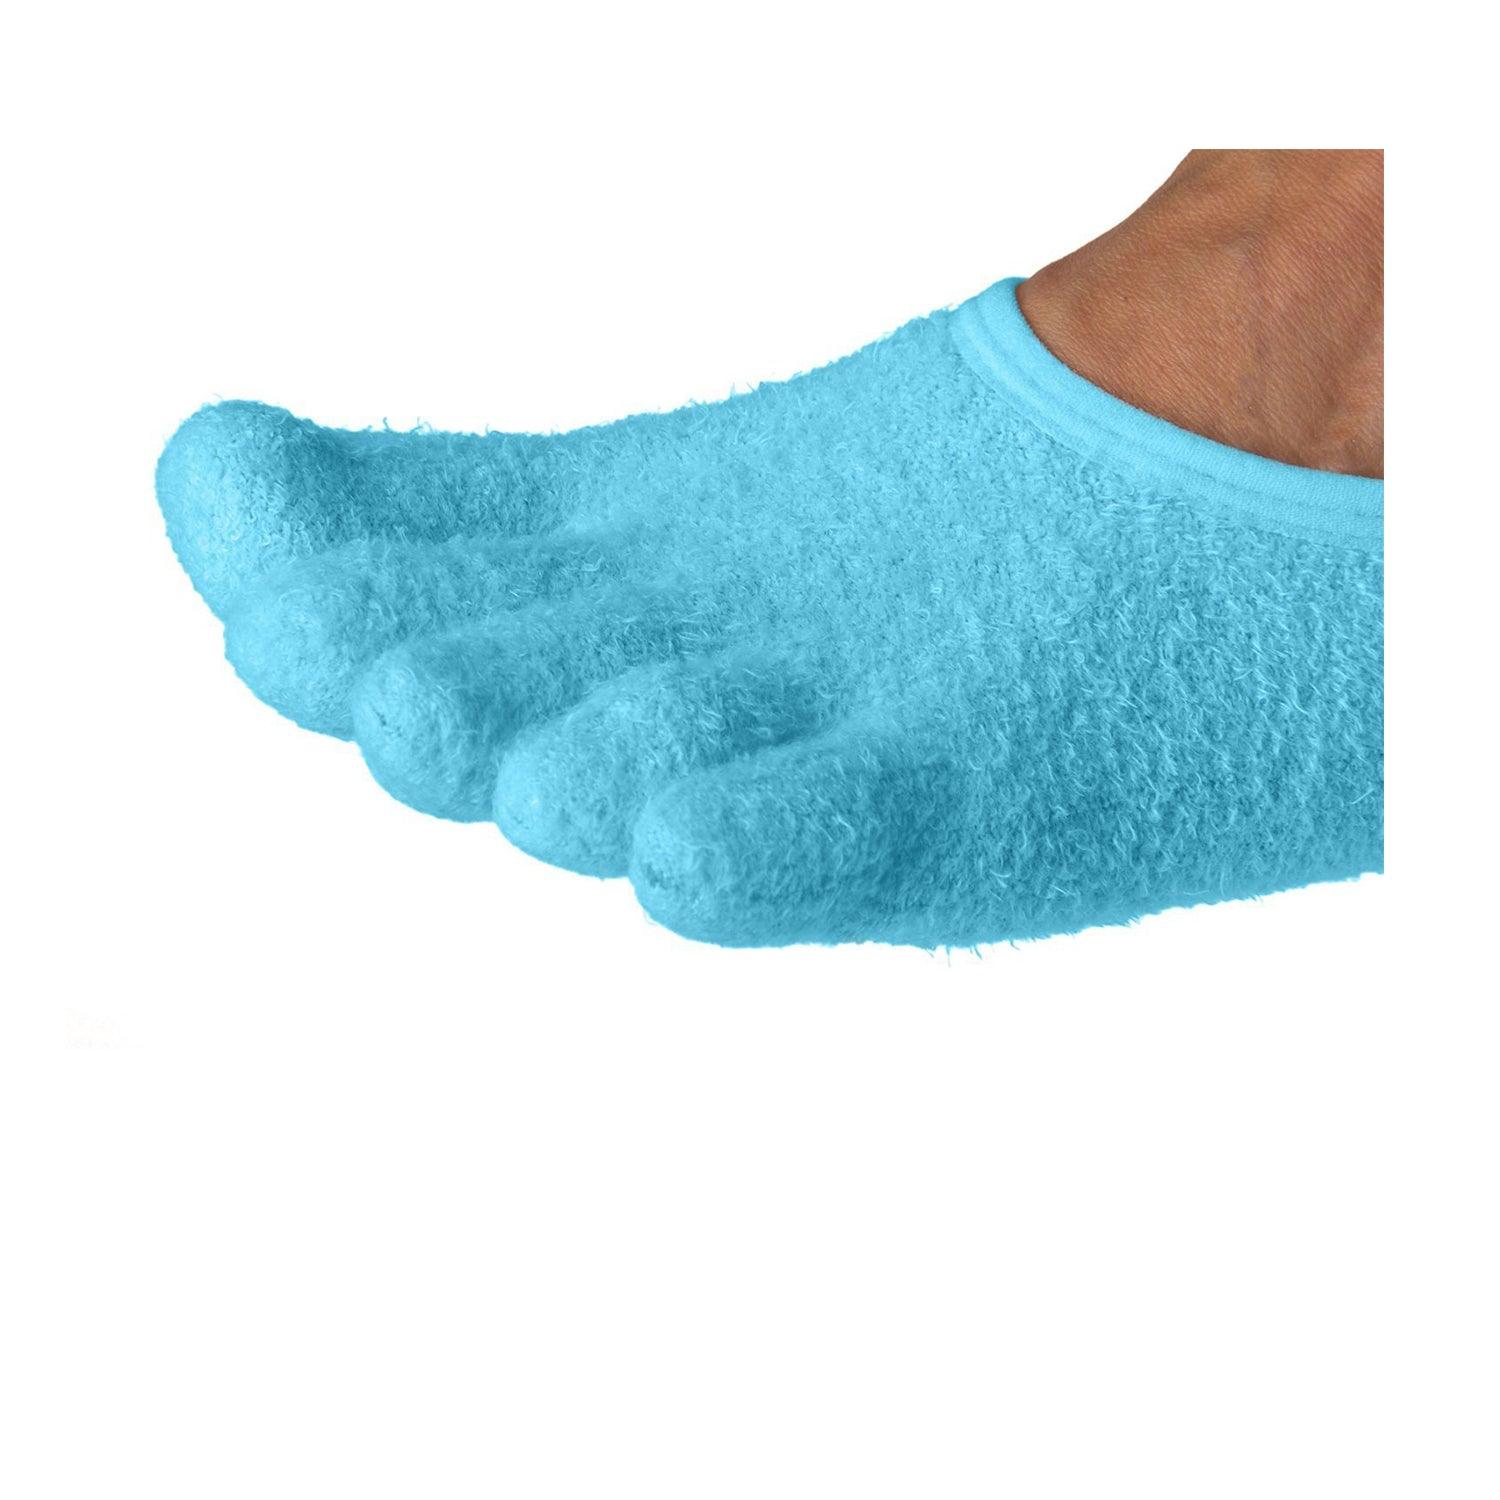 Foot socks with gel good quality